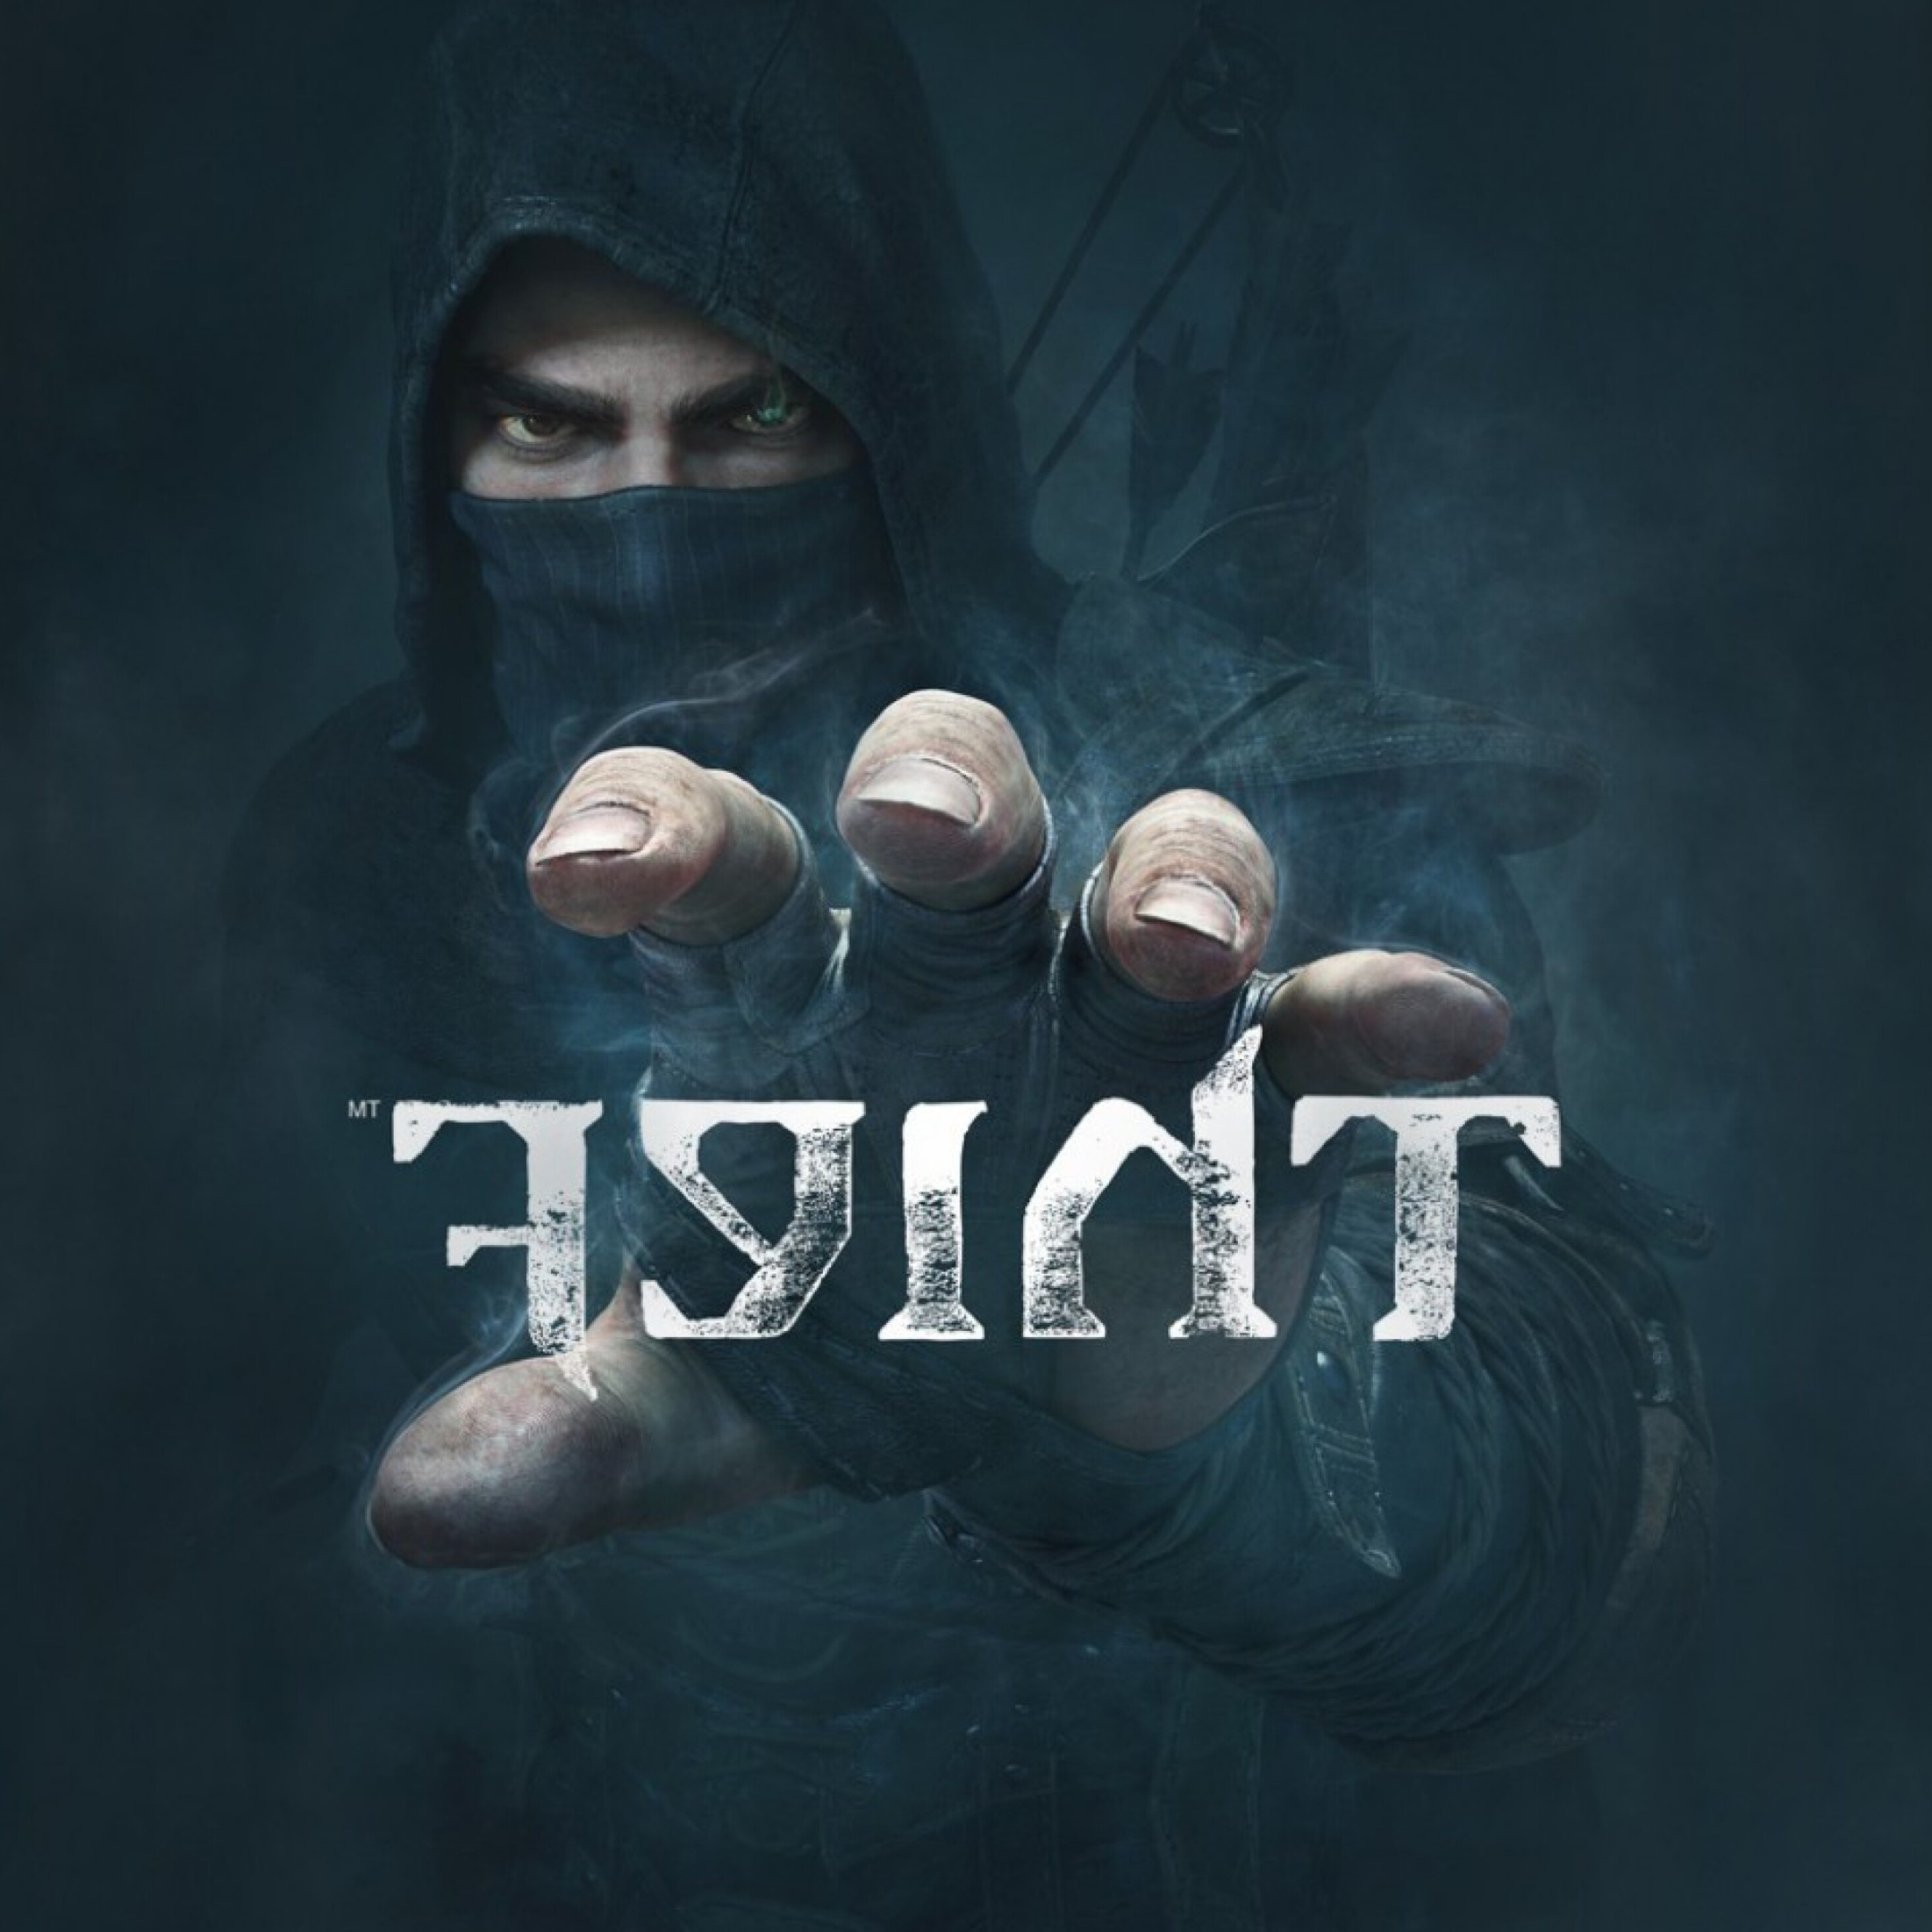 Thief ps4. Thief (игра, 2014). Thief ps3 (русская версия). Игра Thief 4.